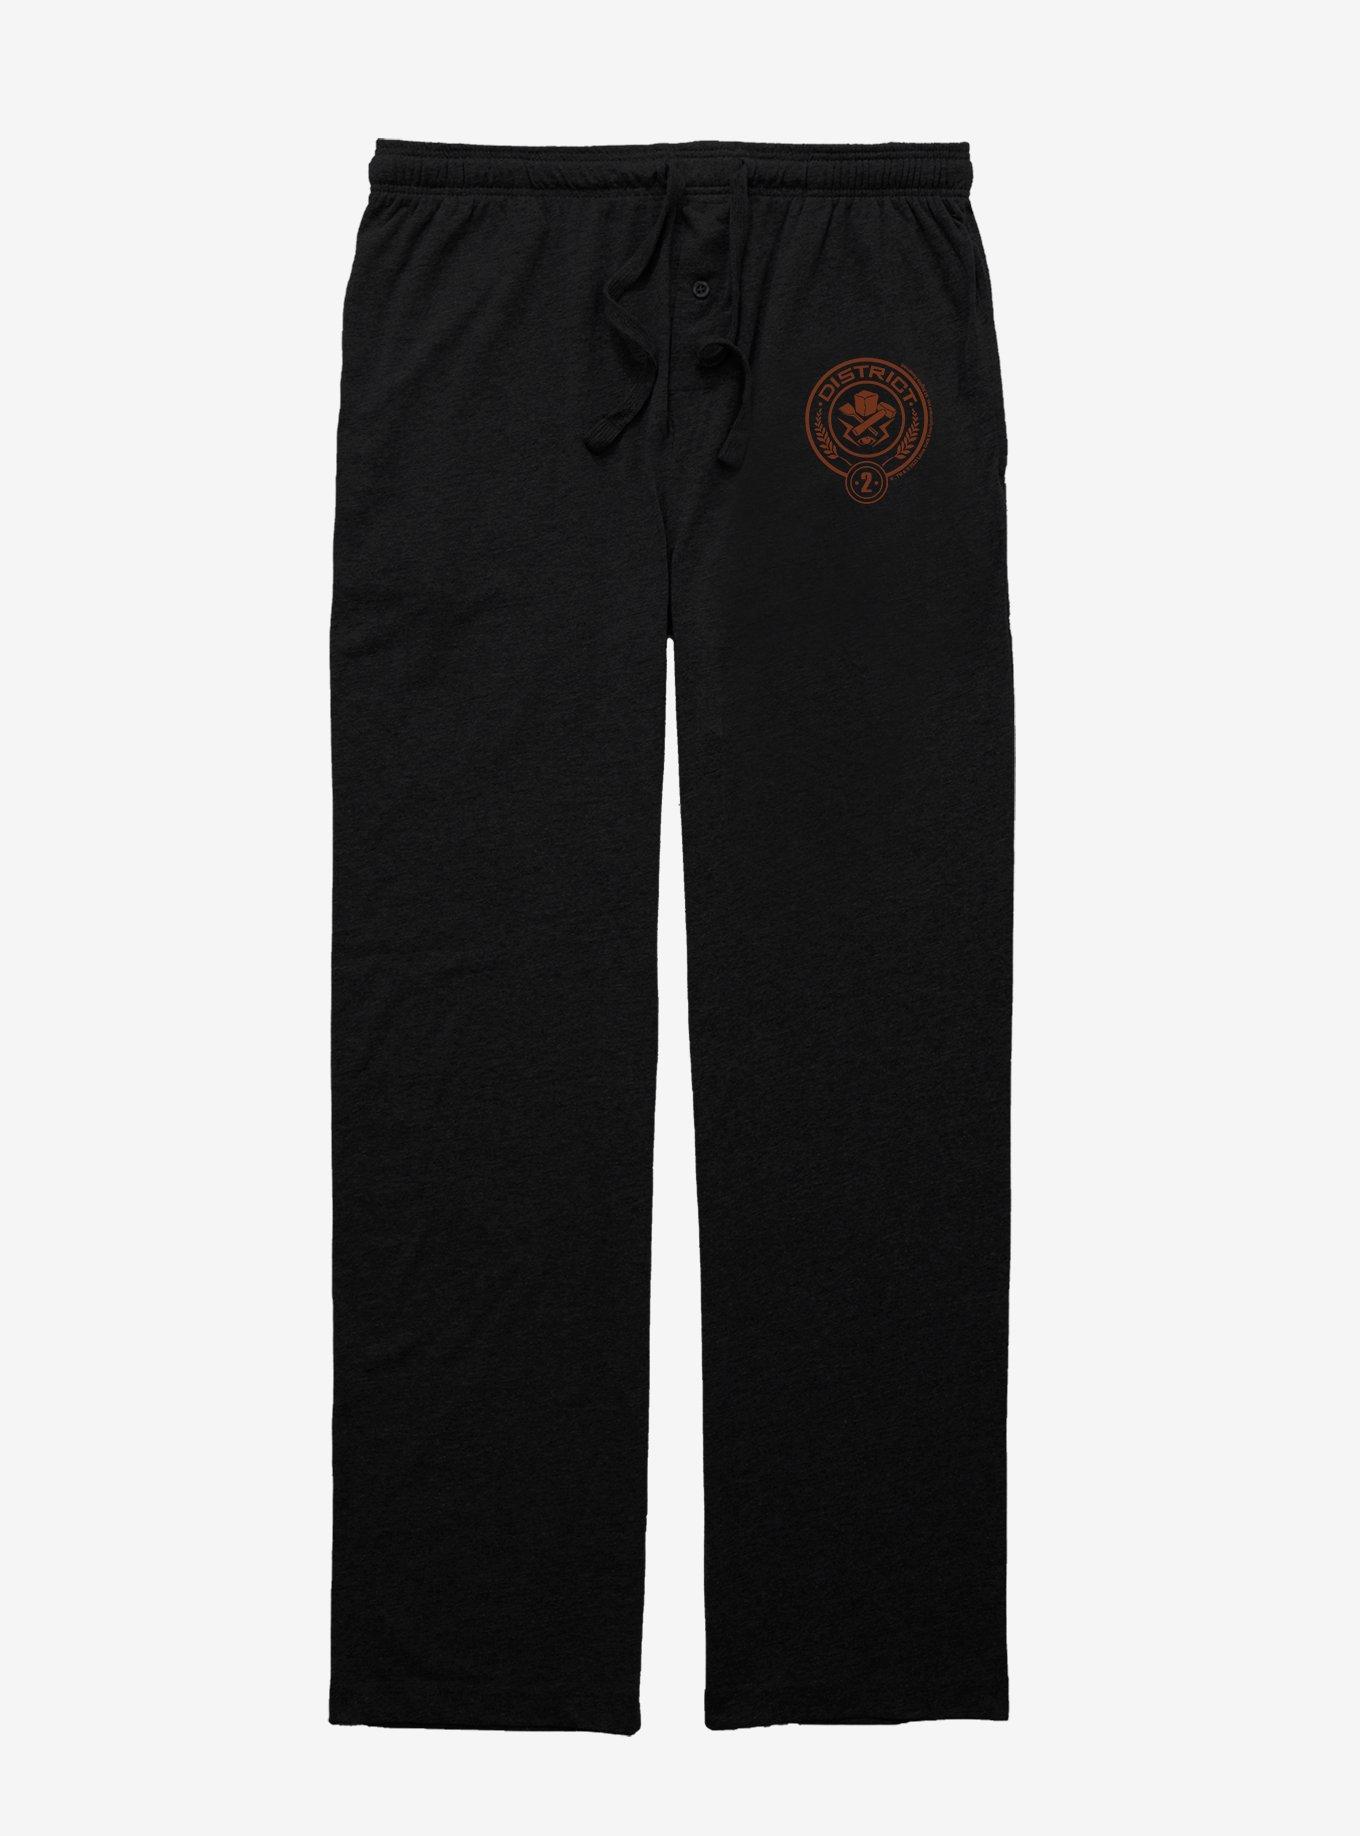 Hunger Games District 2 Emblem Pajama Pants, BLACK, hi-res